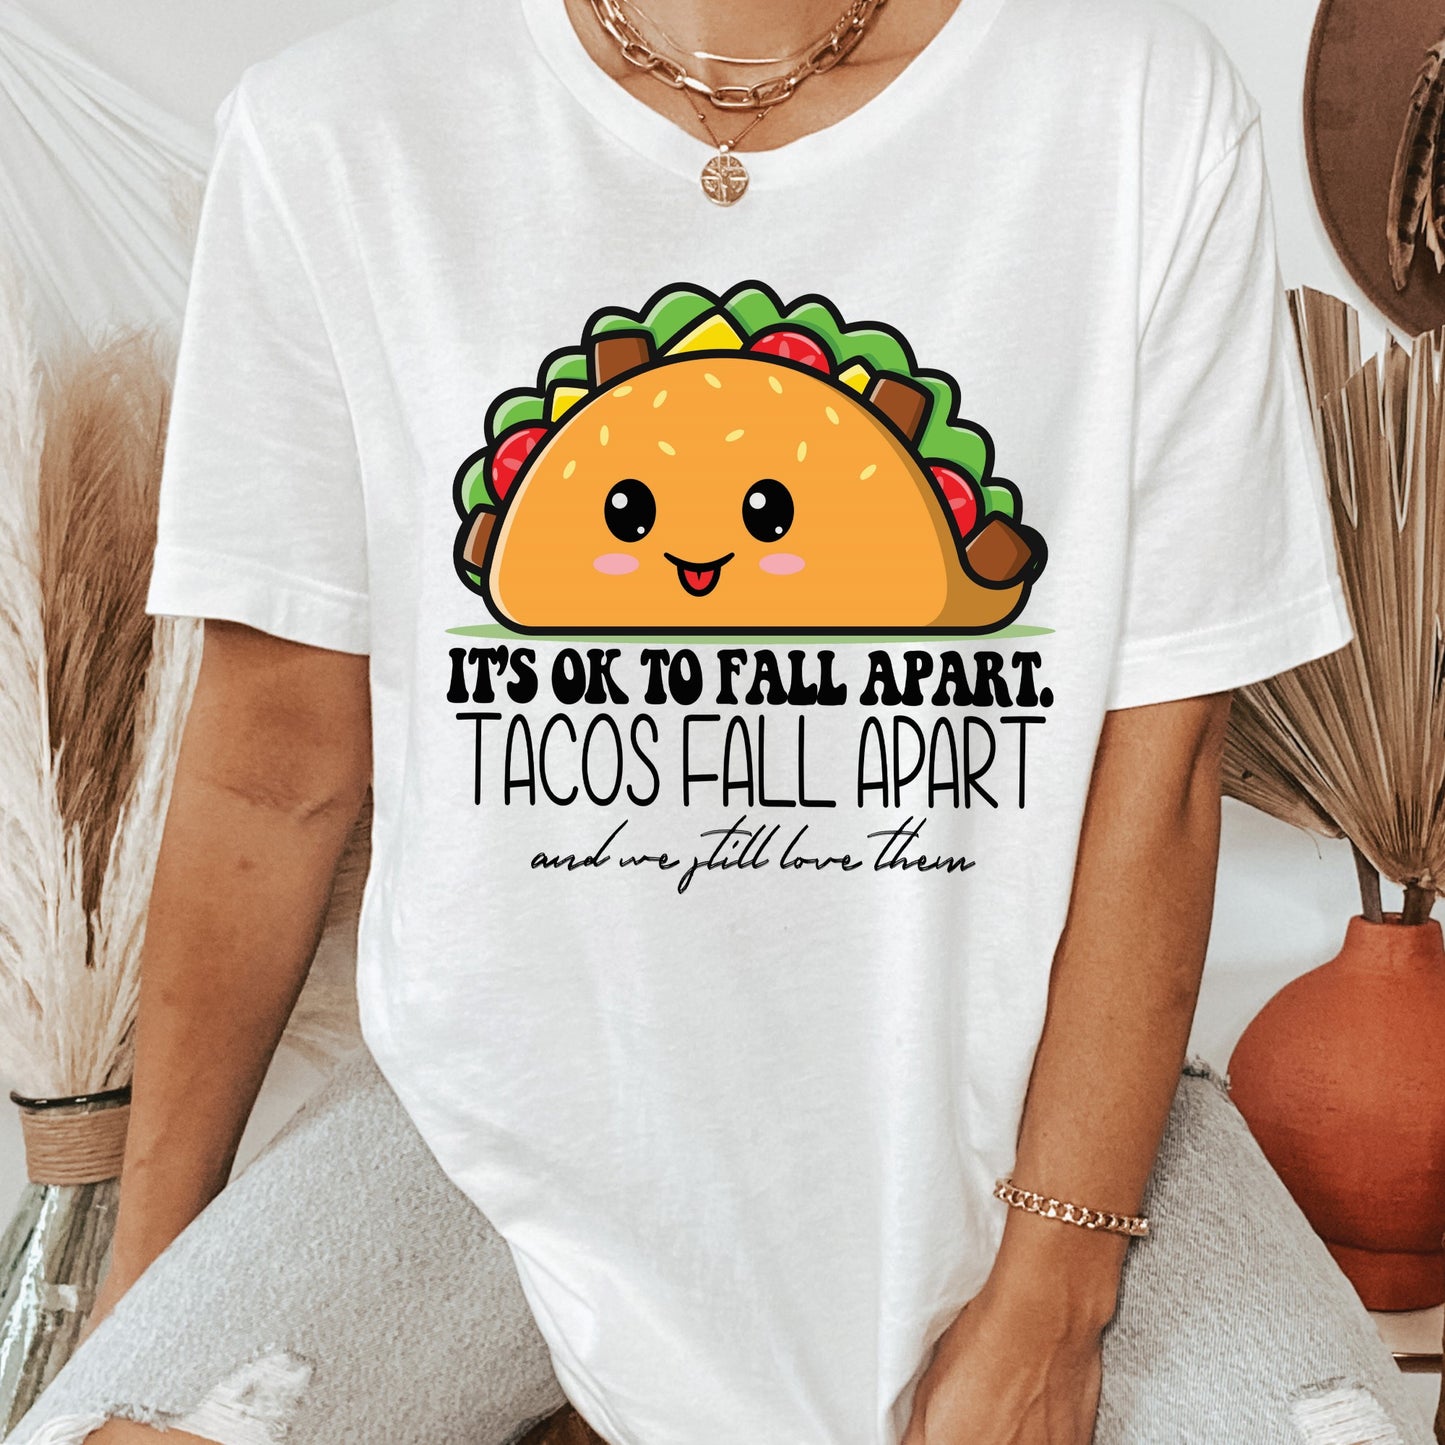 Tacos Fall Apart Sublimation Transfer (read description)